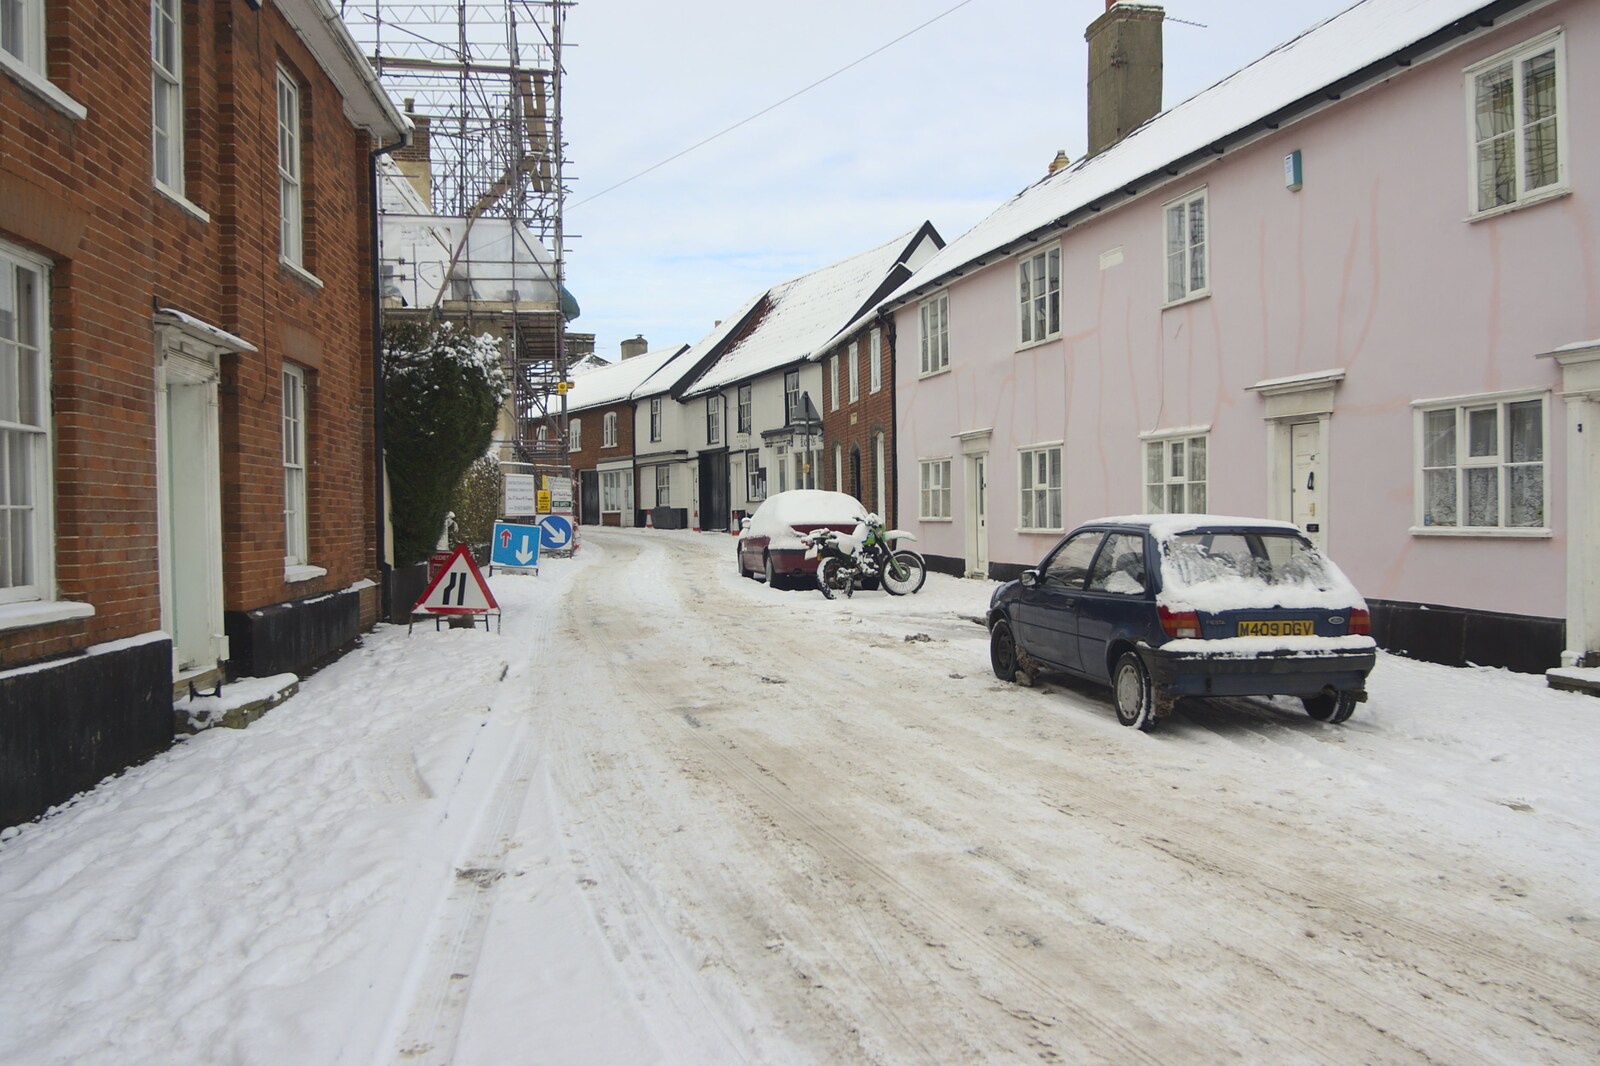 A Snowy Miscellany, Diss, Norfolk - 9th January 2010: Church Street in Eye, near Beard's